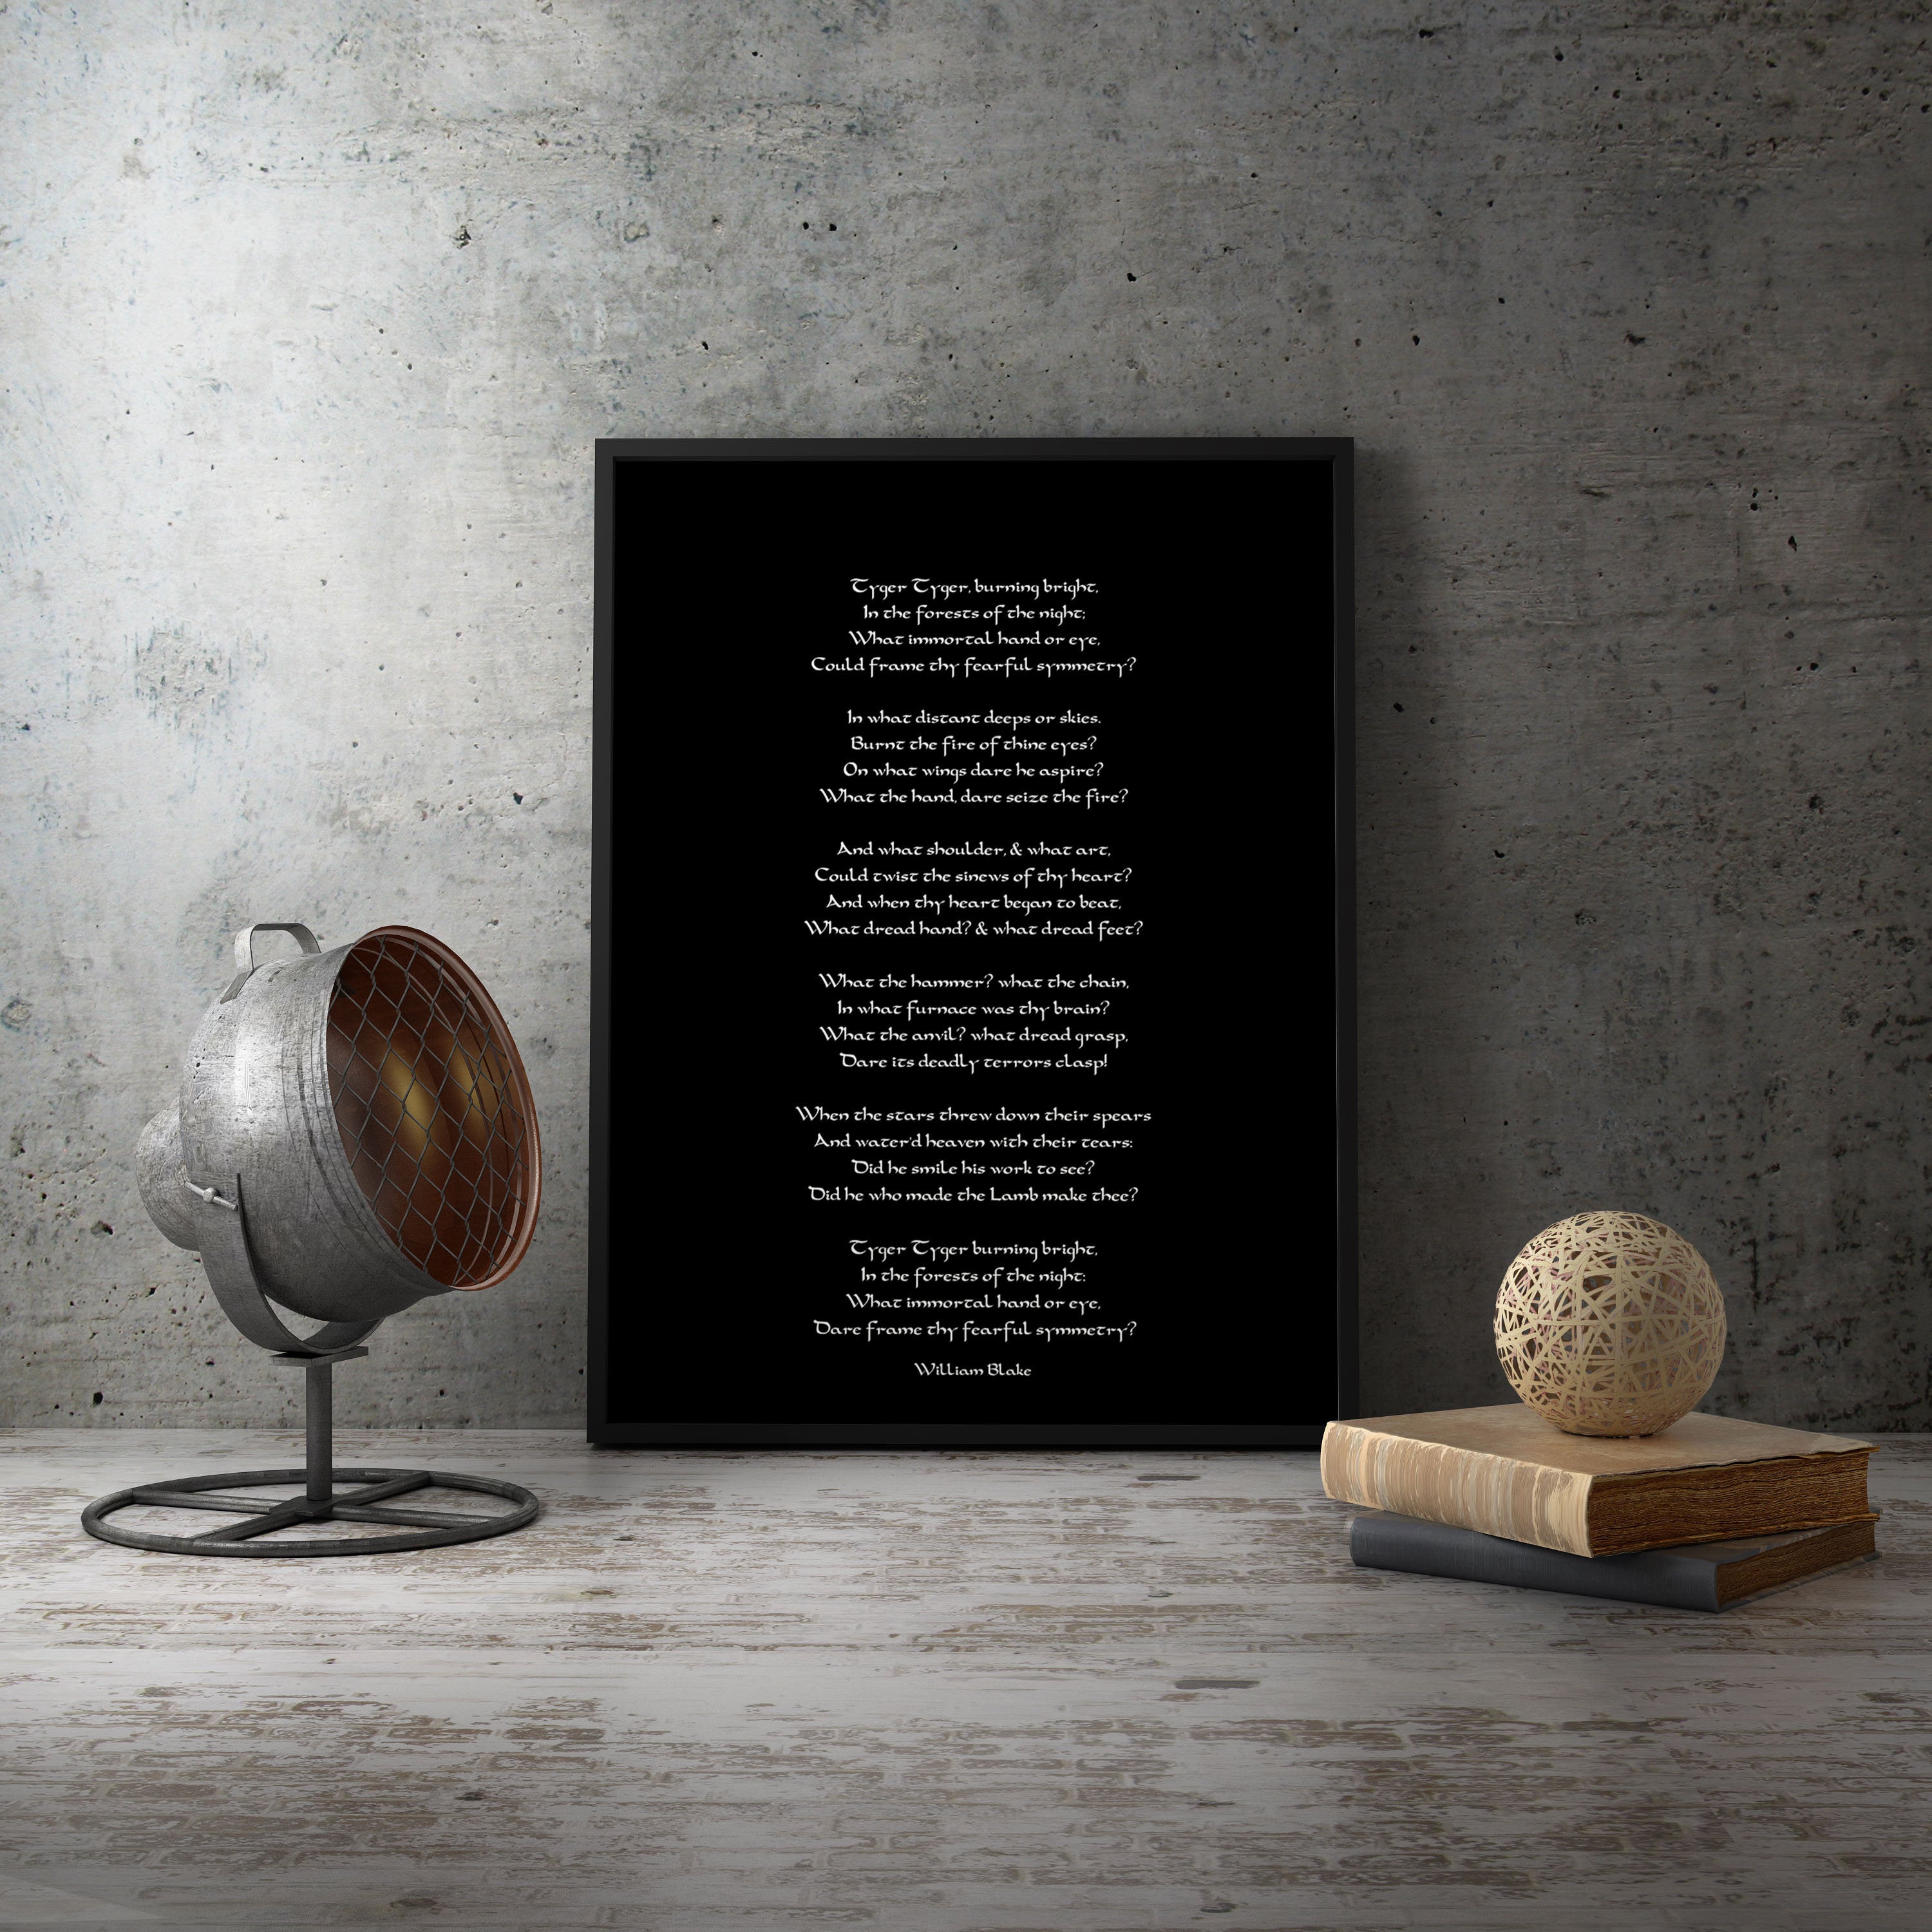 William Blake The Tyger Poem Print Black & White for Home Wall Decor, Unframed - BookQuoteDecor